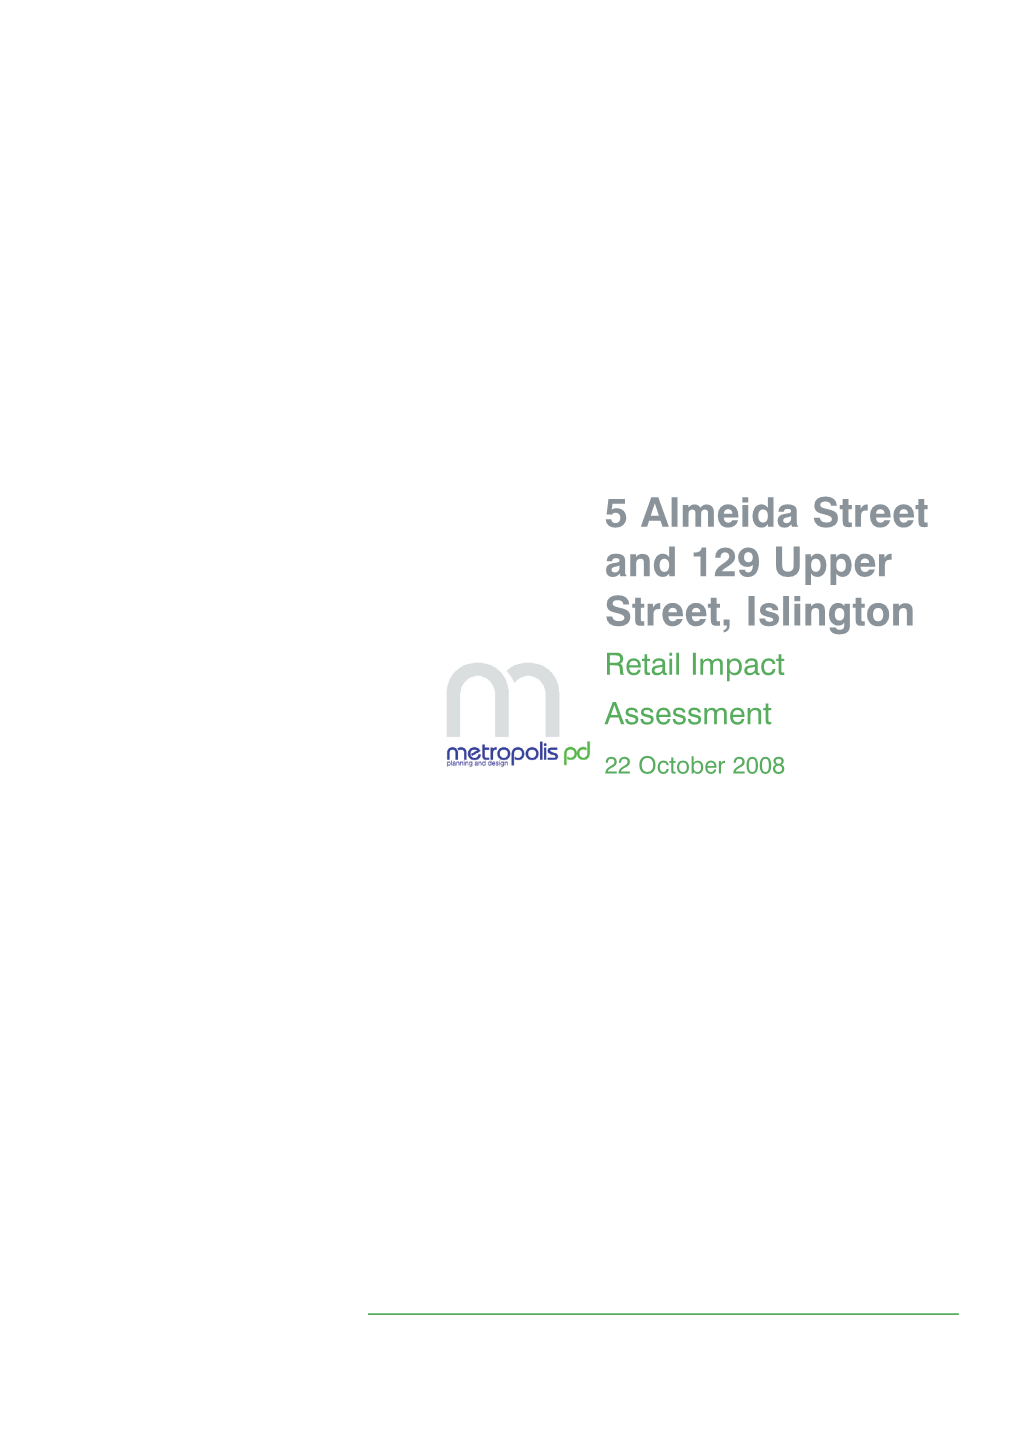 5 Almeida Street and 129 Upper Street, Islington Retail Impact Assessment 22 October 2008